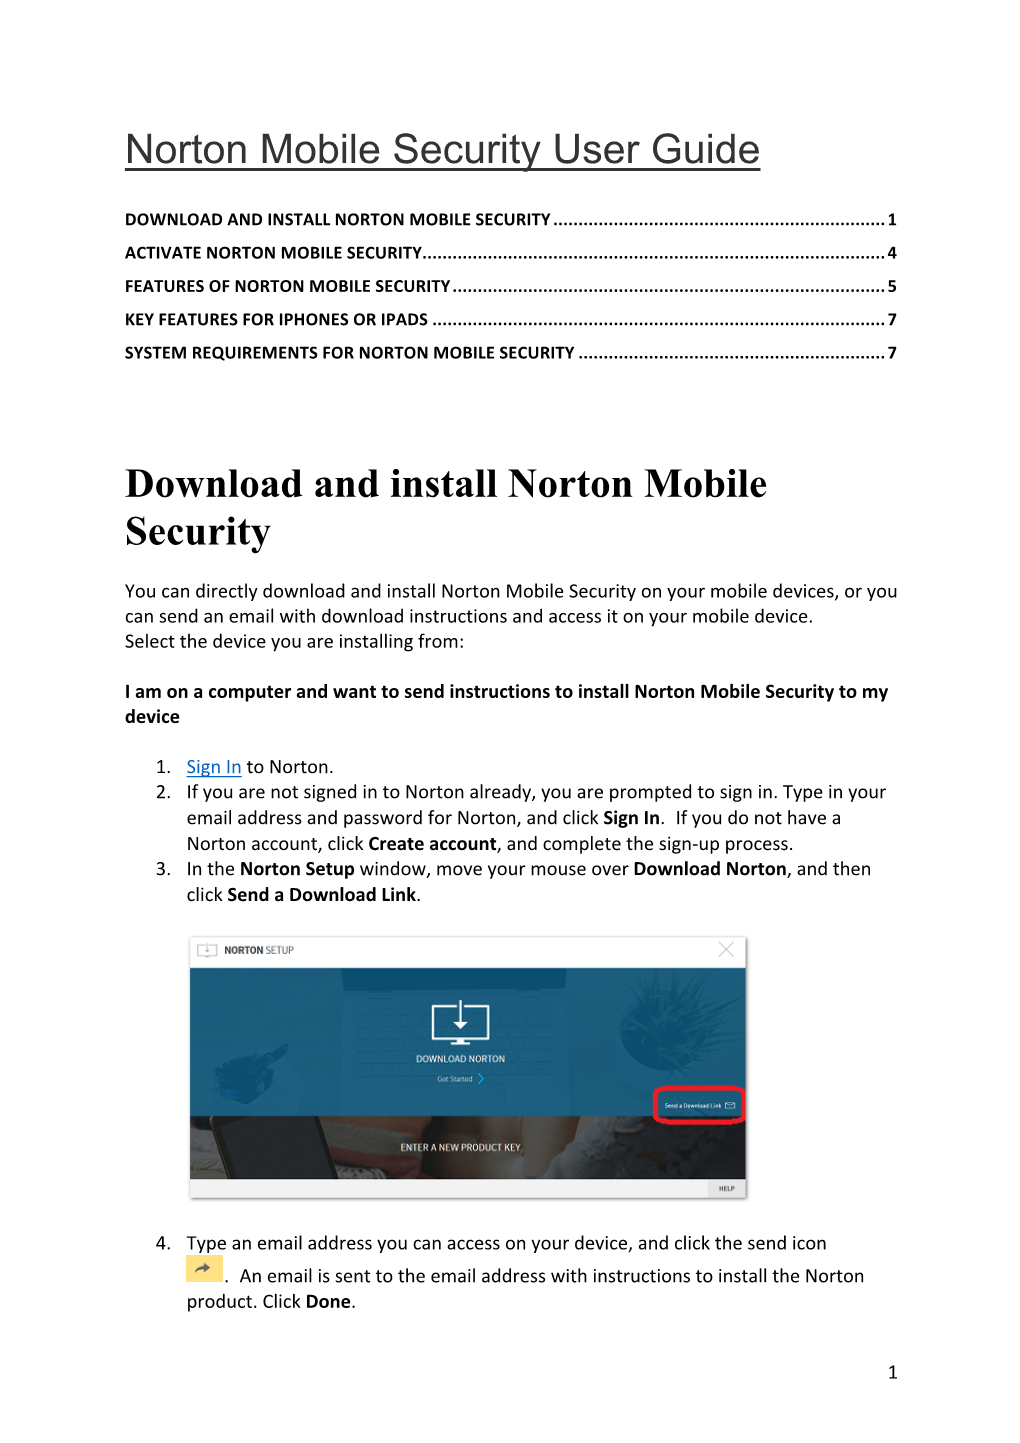 Norton-Mobile-Security-User-Guide-Eng